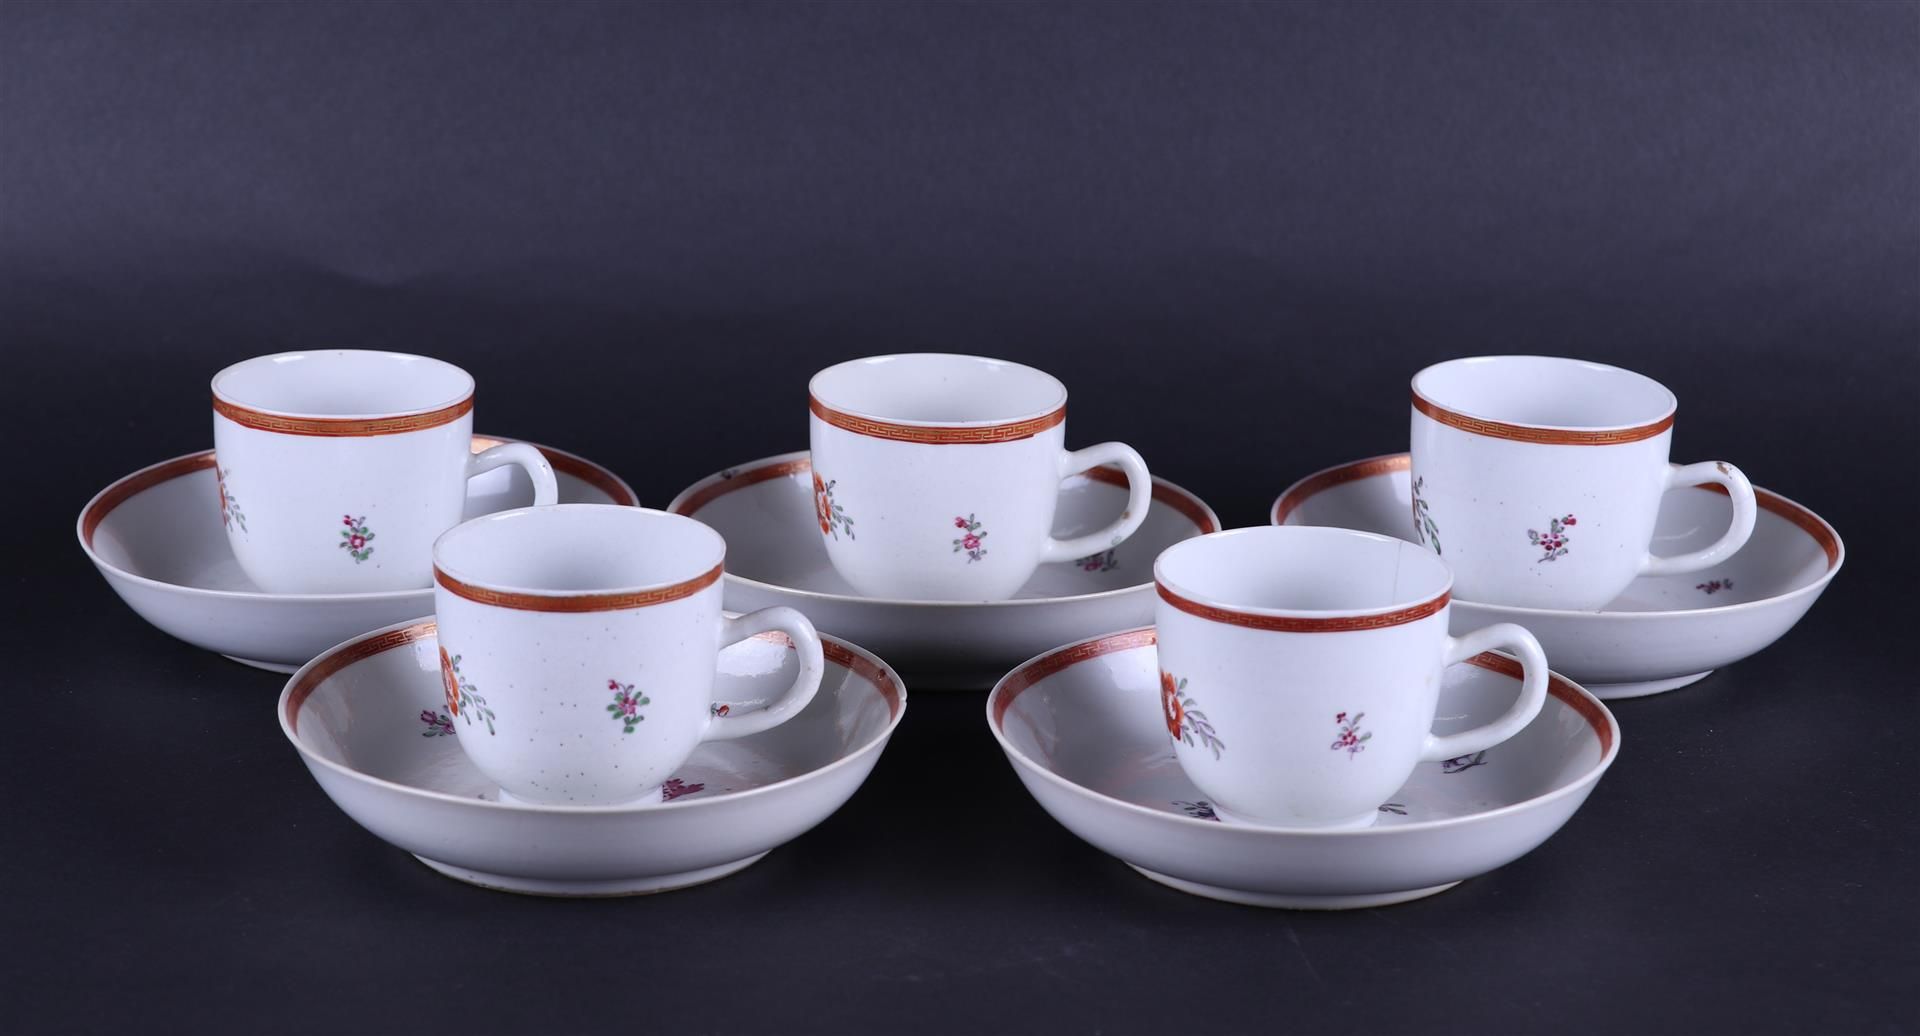 A set ofÊ(5) porcelain Famile Rose cups and saucers. China, 18th century.
Diam. 14 cm.